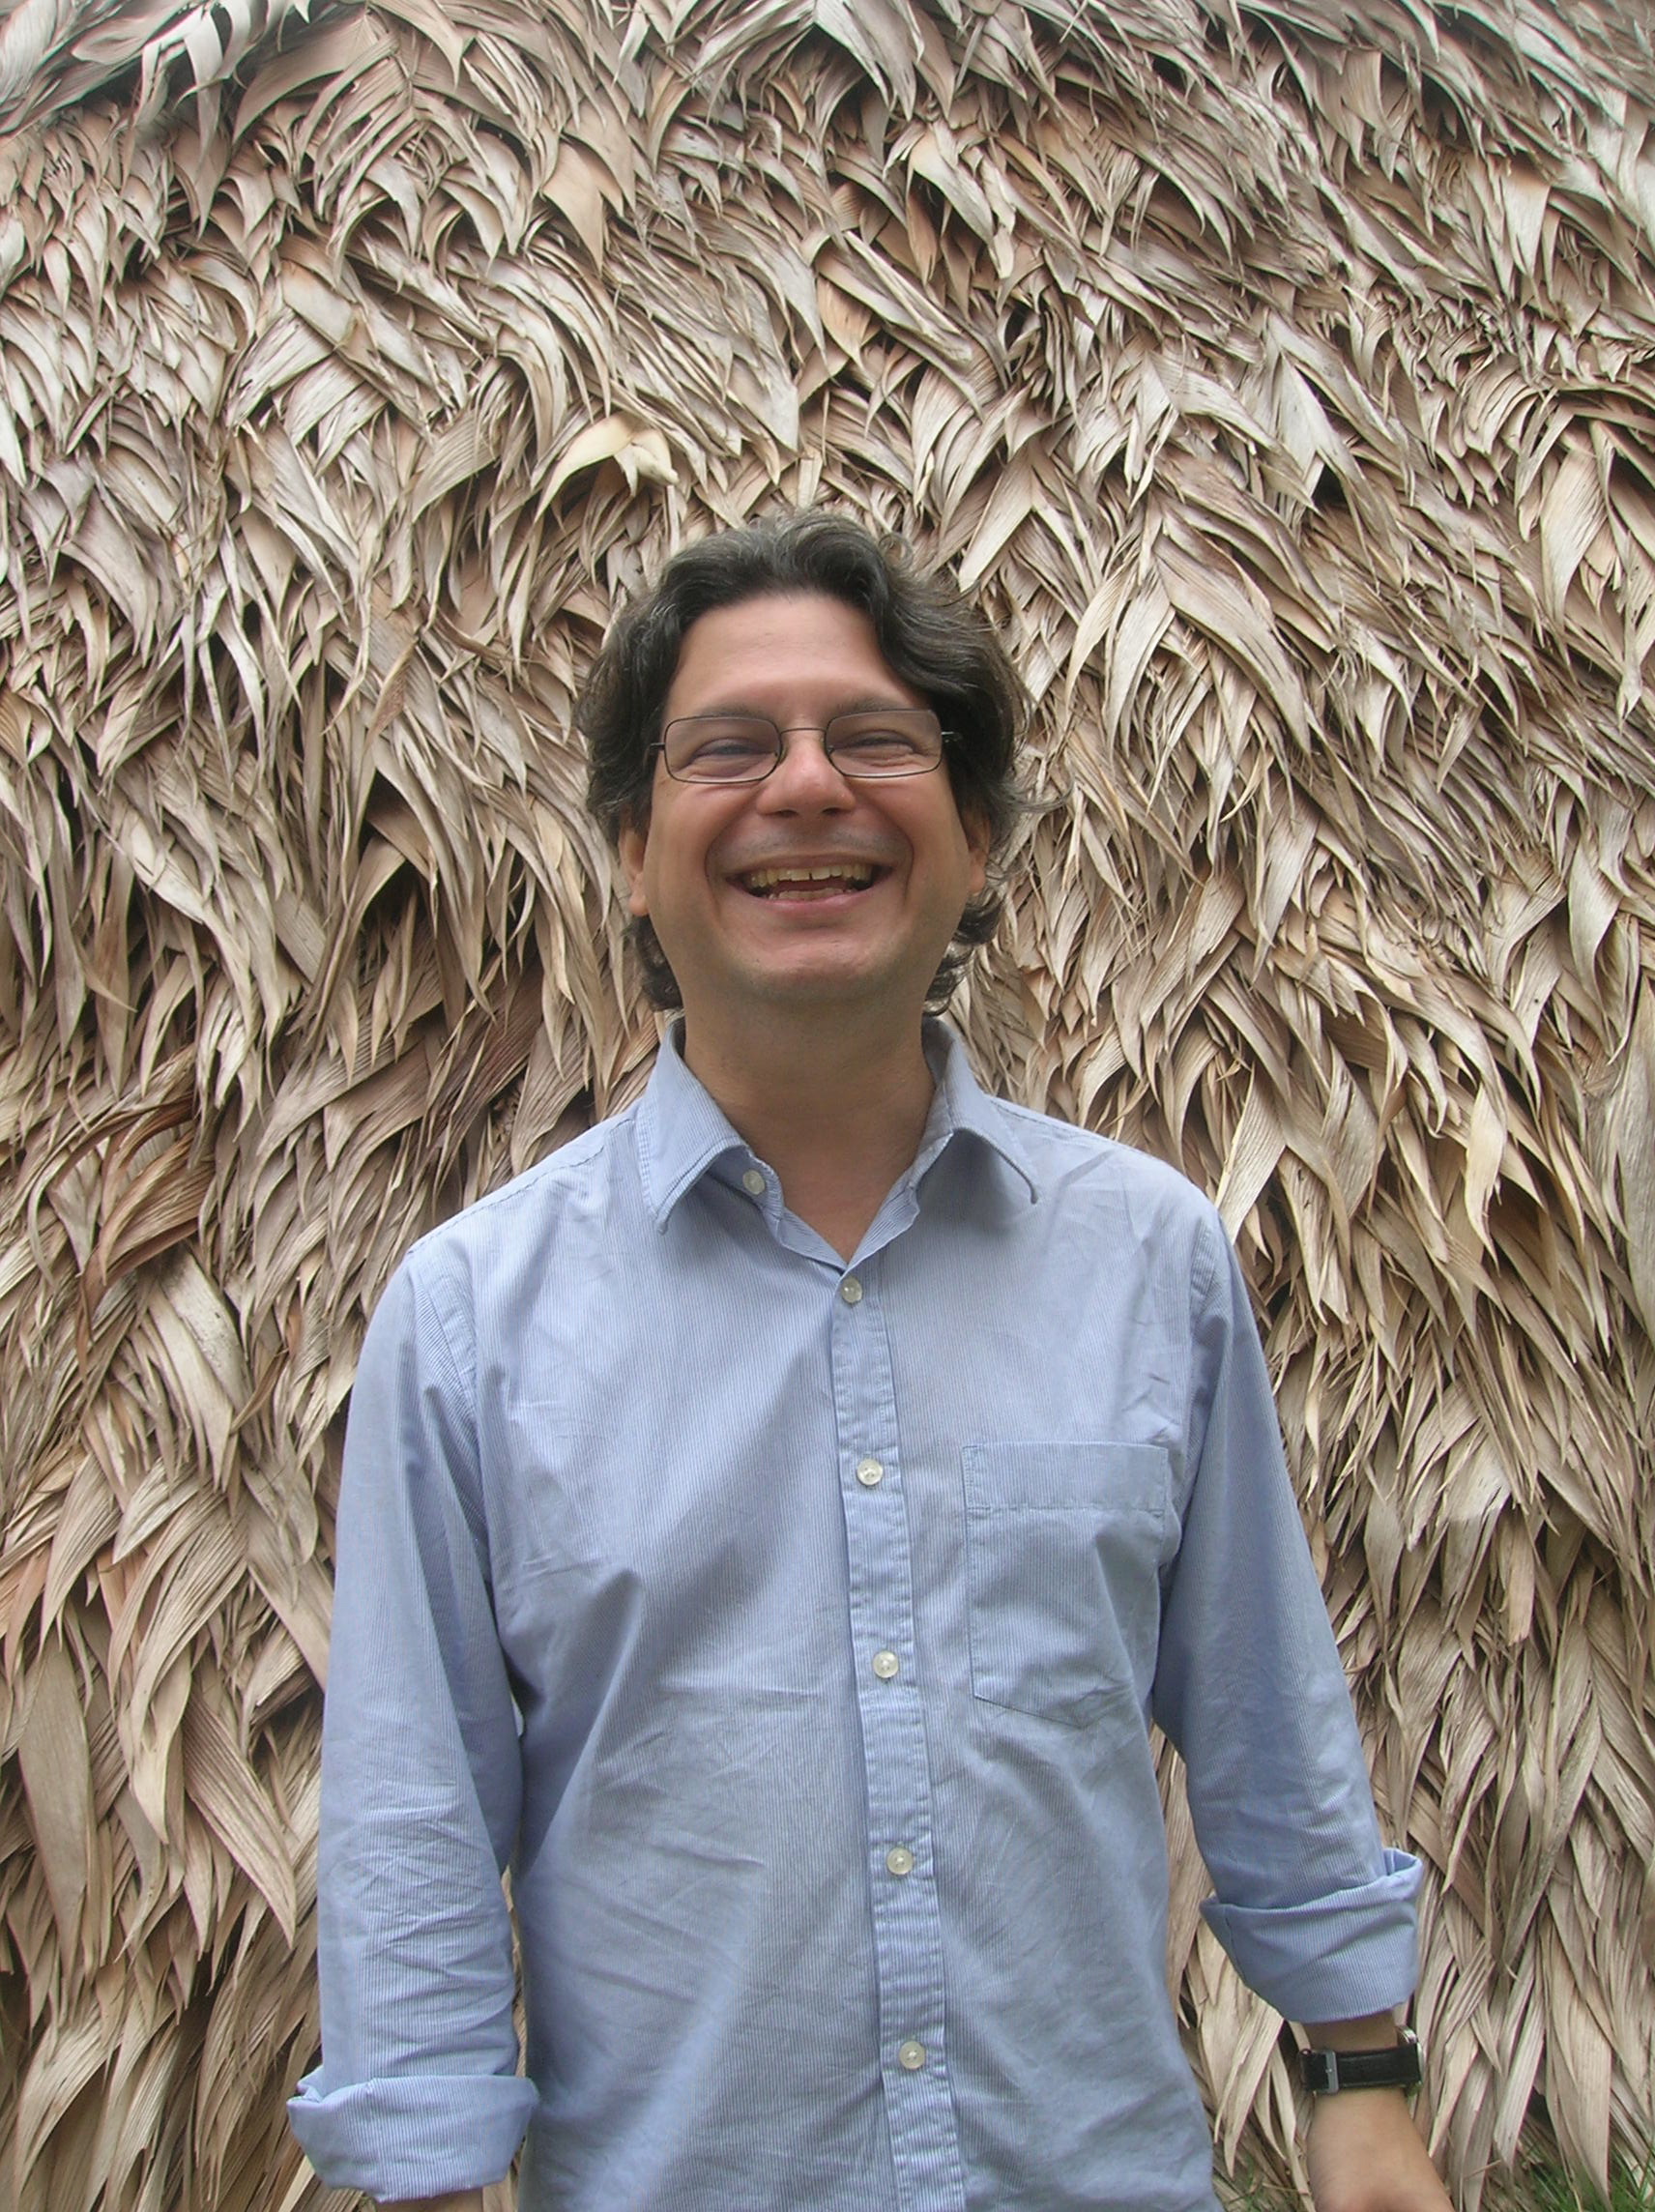 Sergio Roberto de Oliveira at Museu do Indio - DSCN9009